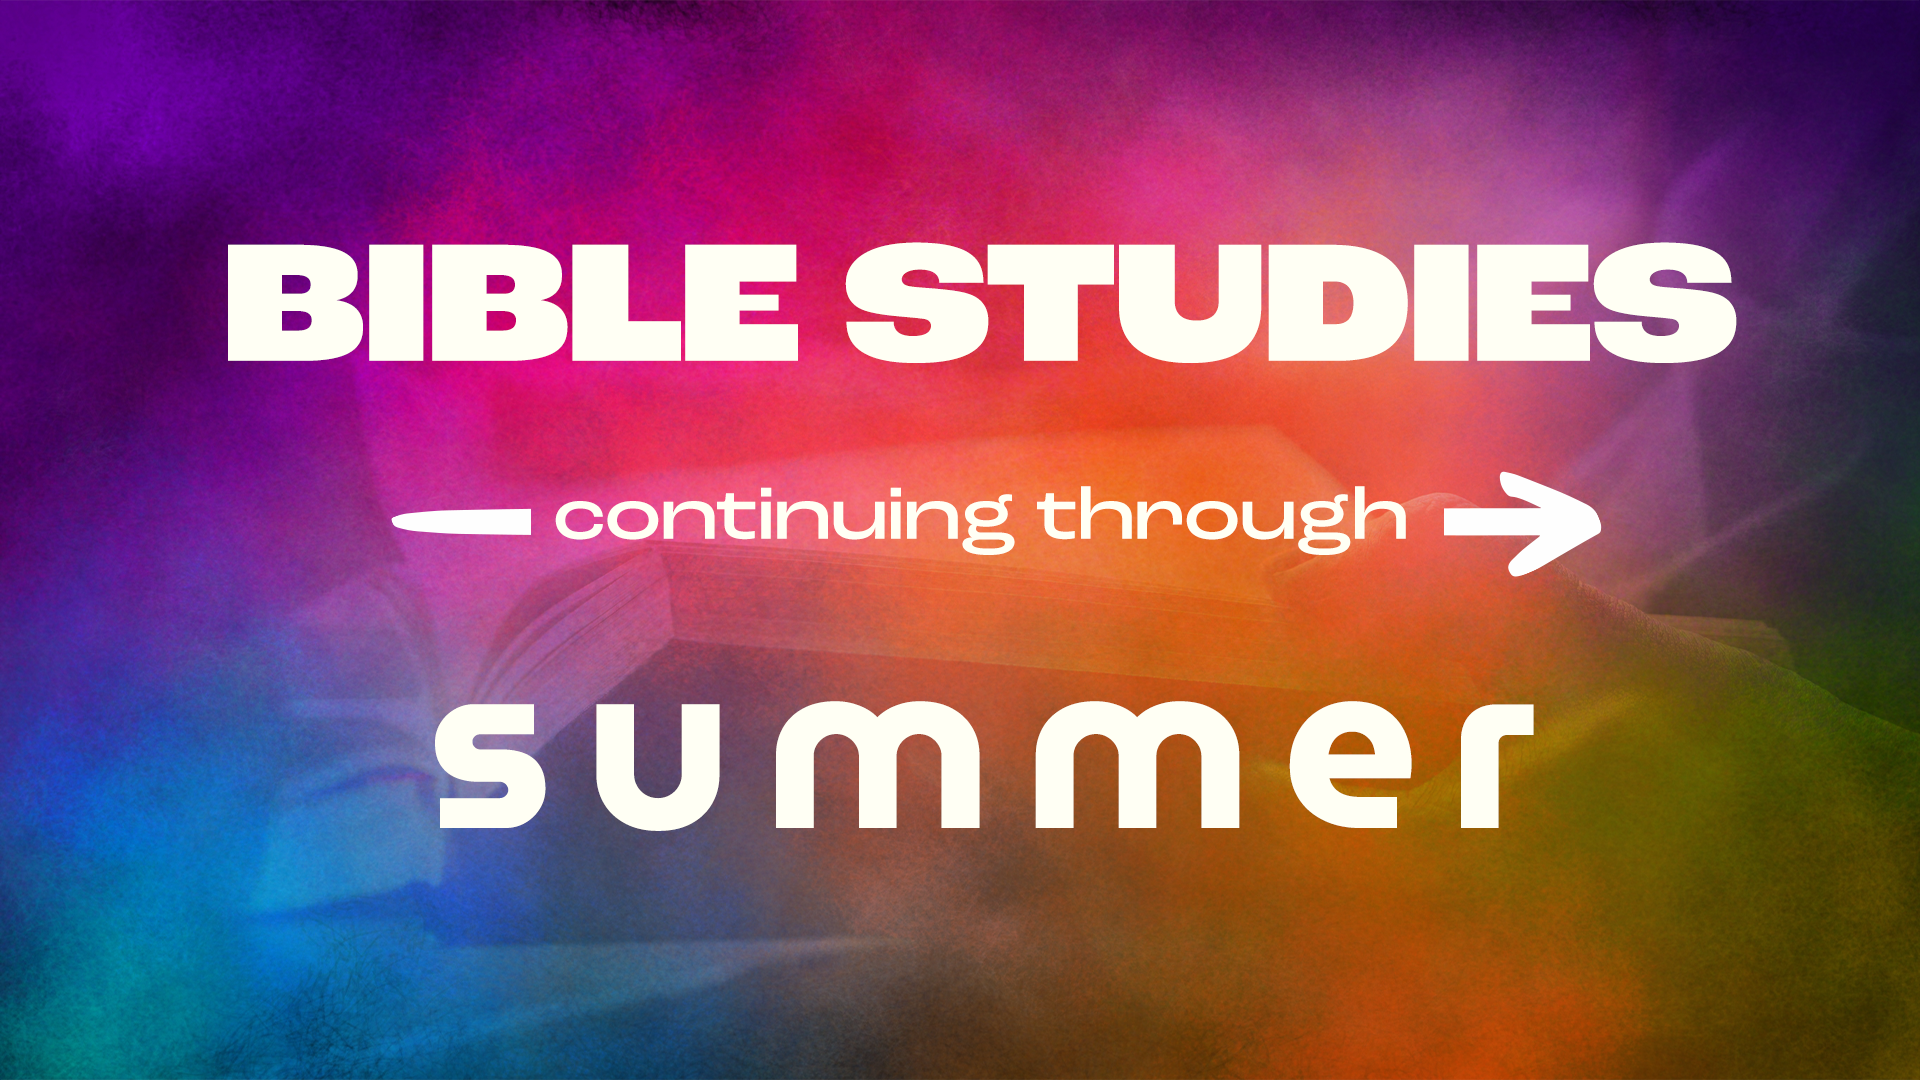 Bible Studies Continuing through Summer